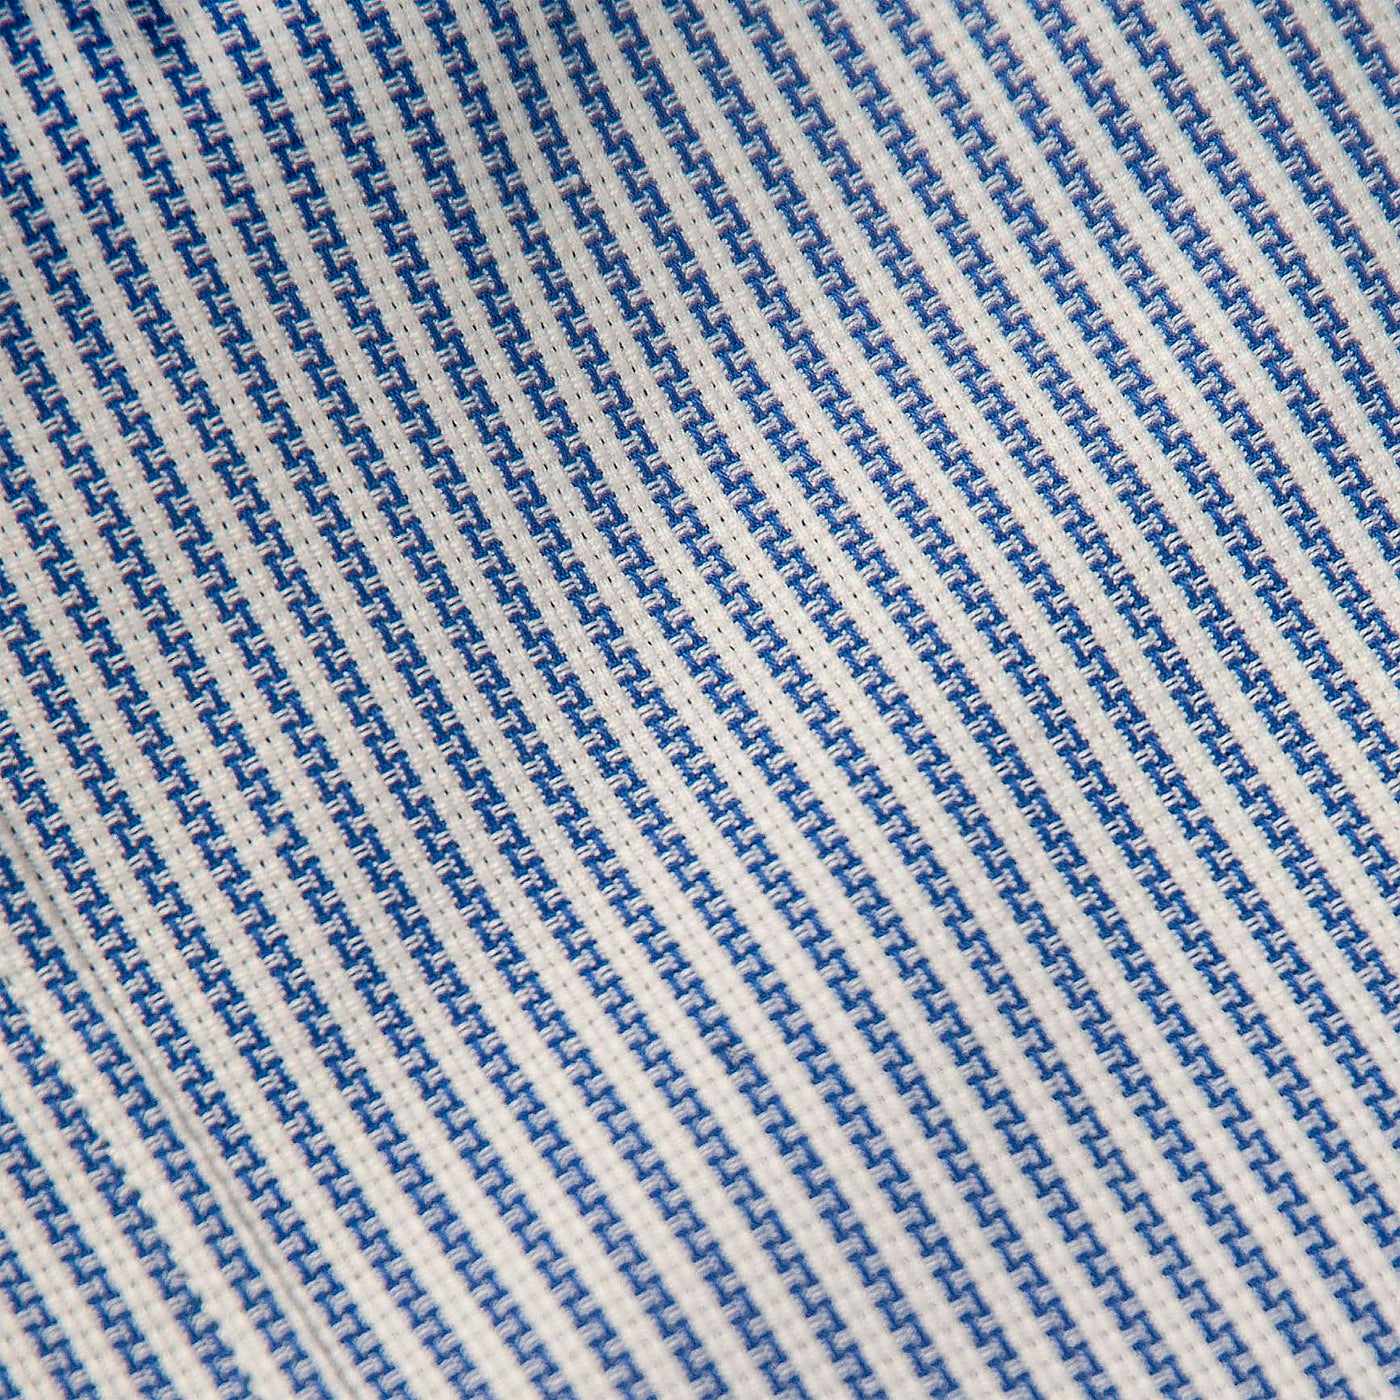 Sandre shirt sporting Open stripe (ocean blue)